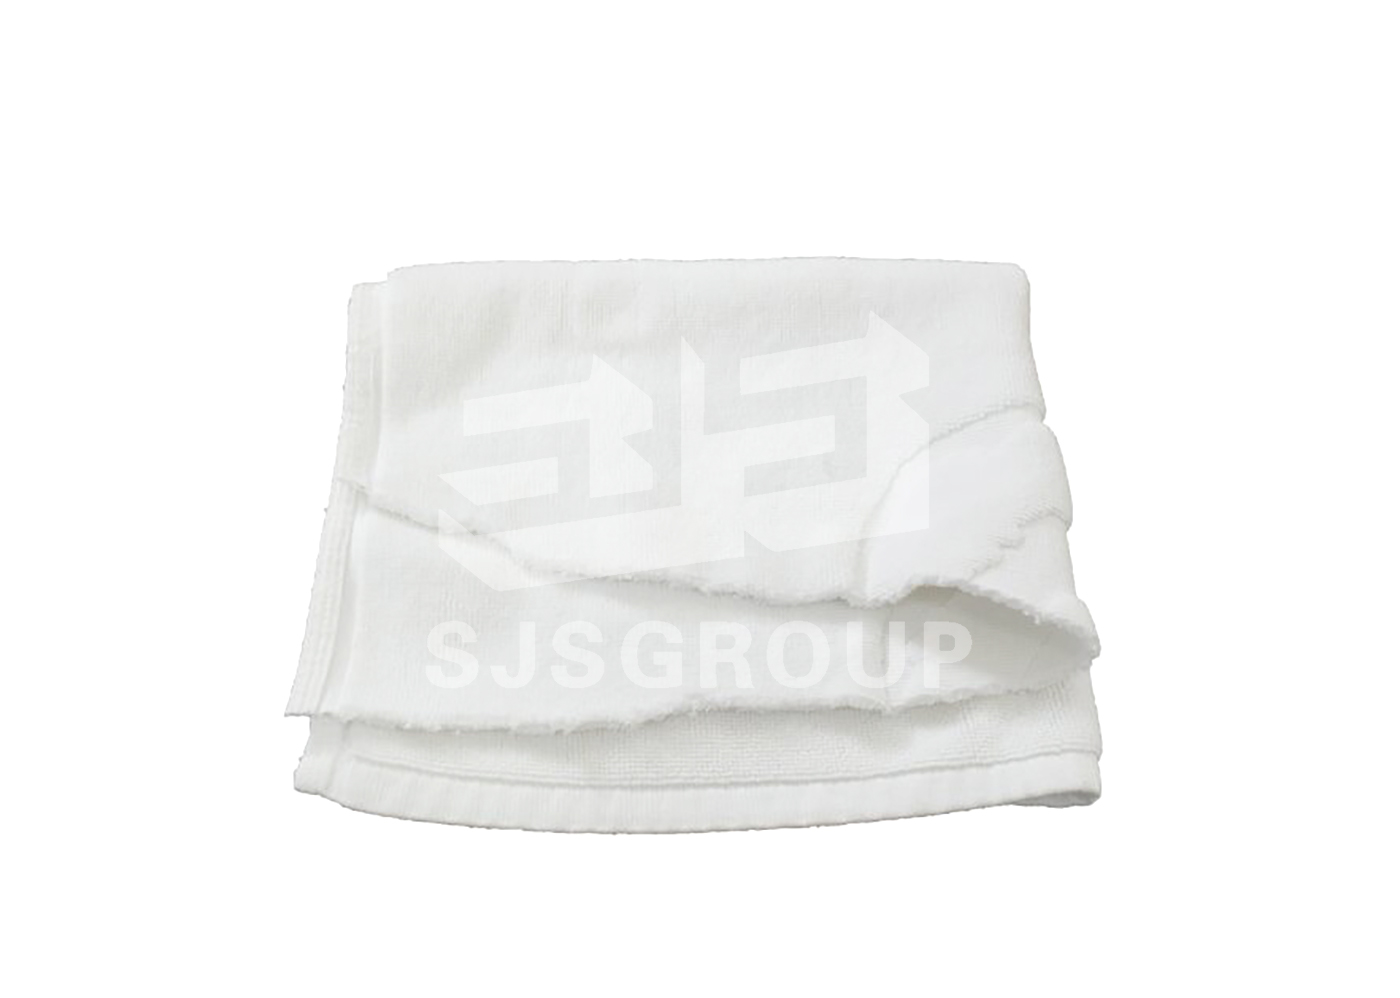 White Towel Rags-White Bath Towel Cotton Rags